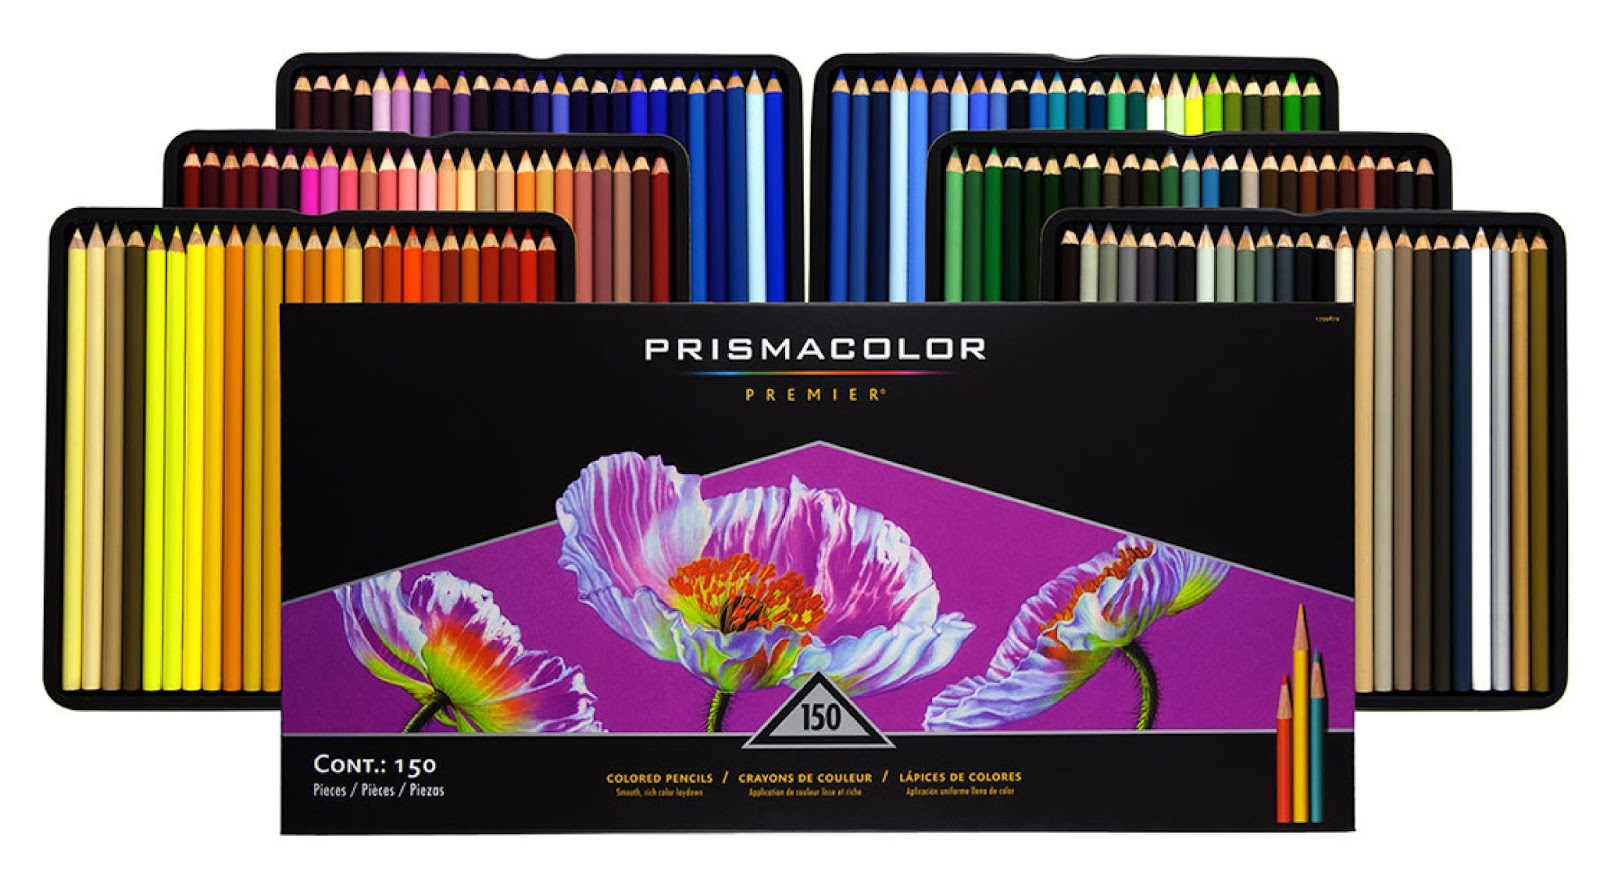 Crayola Colored Pencils - 50-Ct. Adult Colored Pencil Set - Yahoo